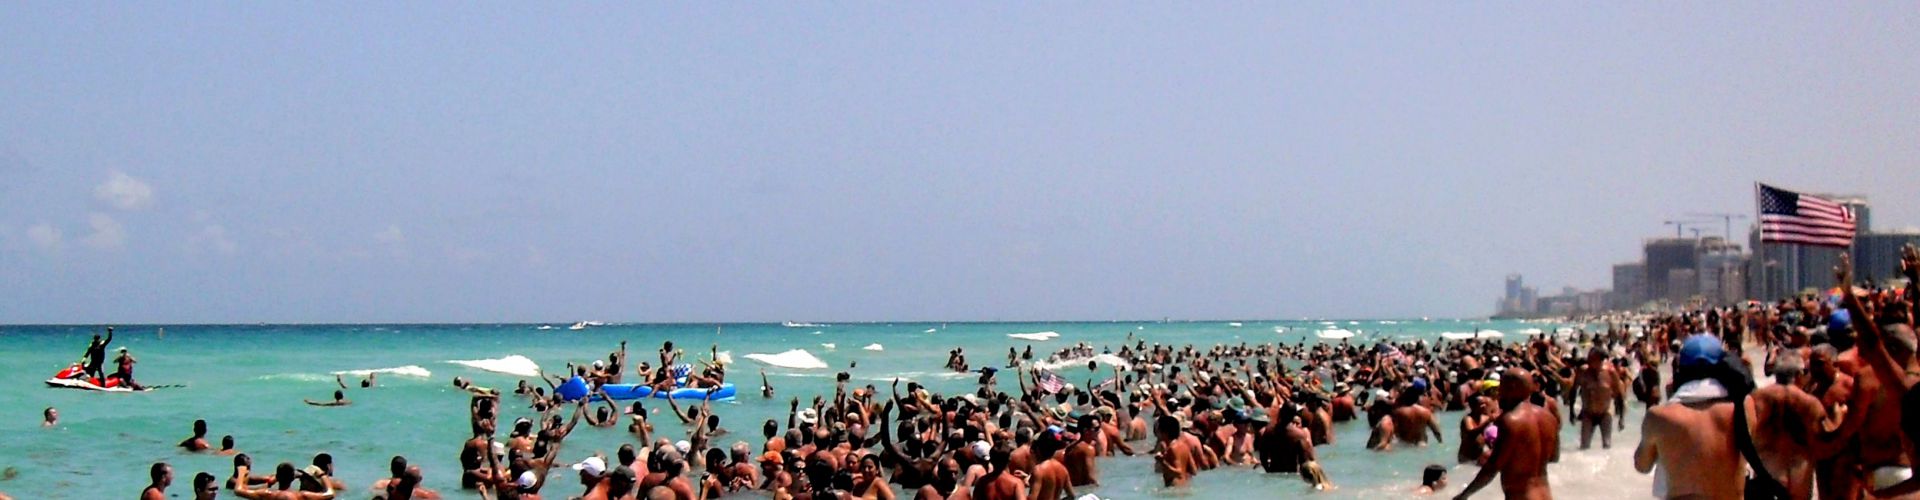 Best Nude Beaches In The World - Haulover Beach Miami 